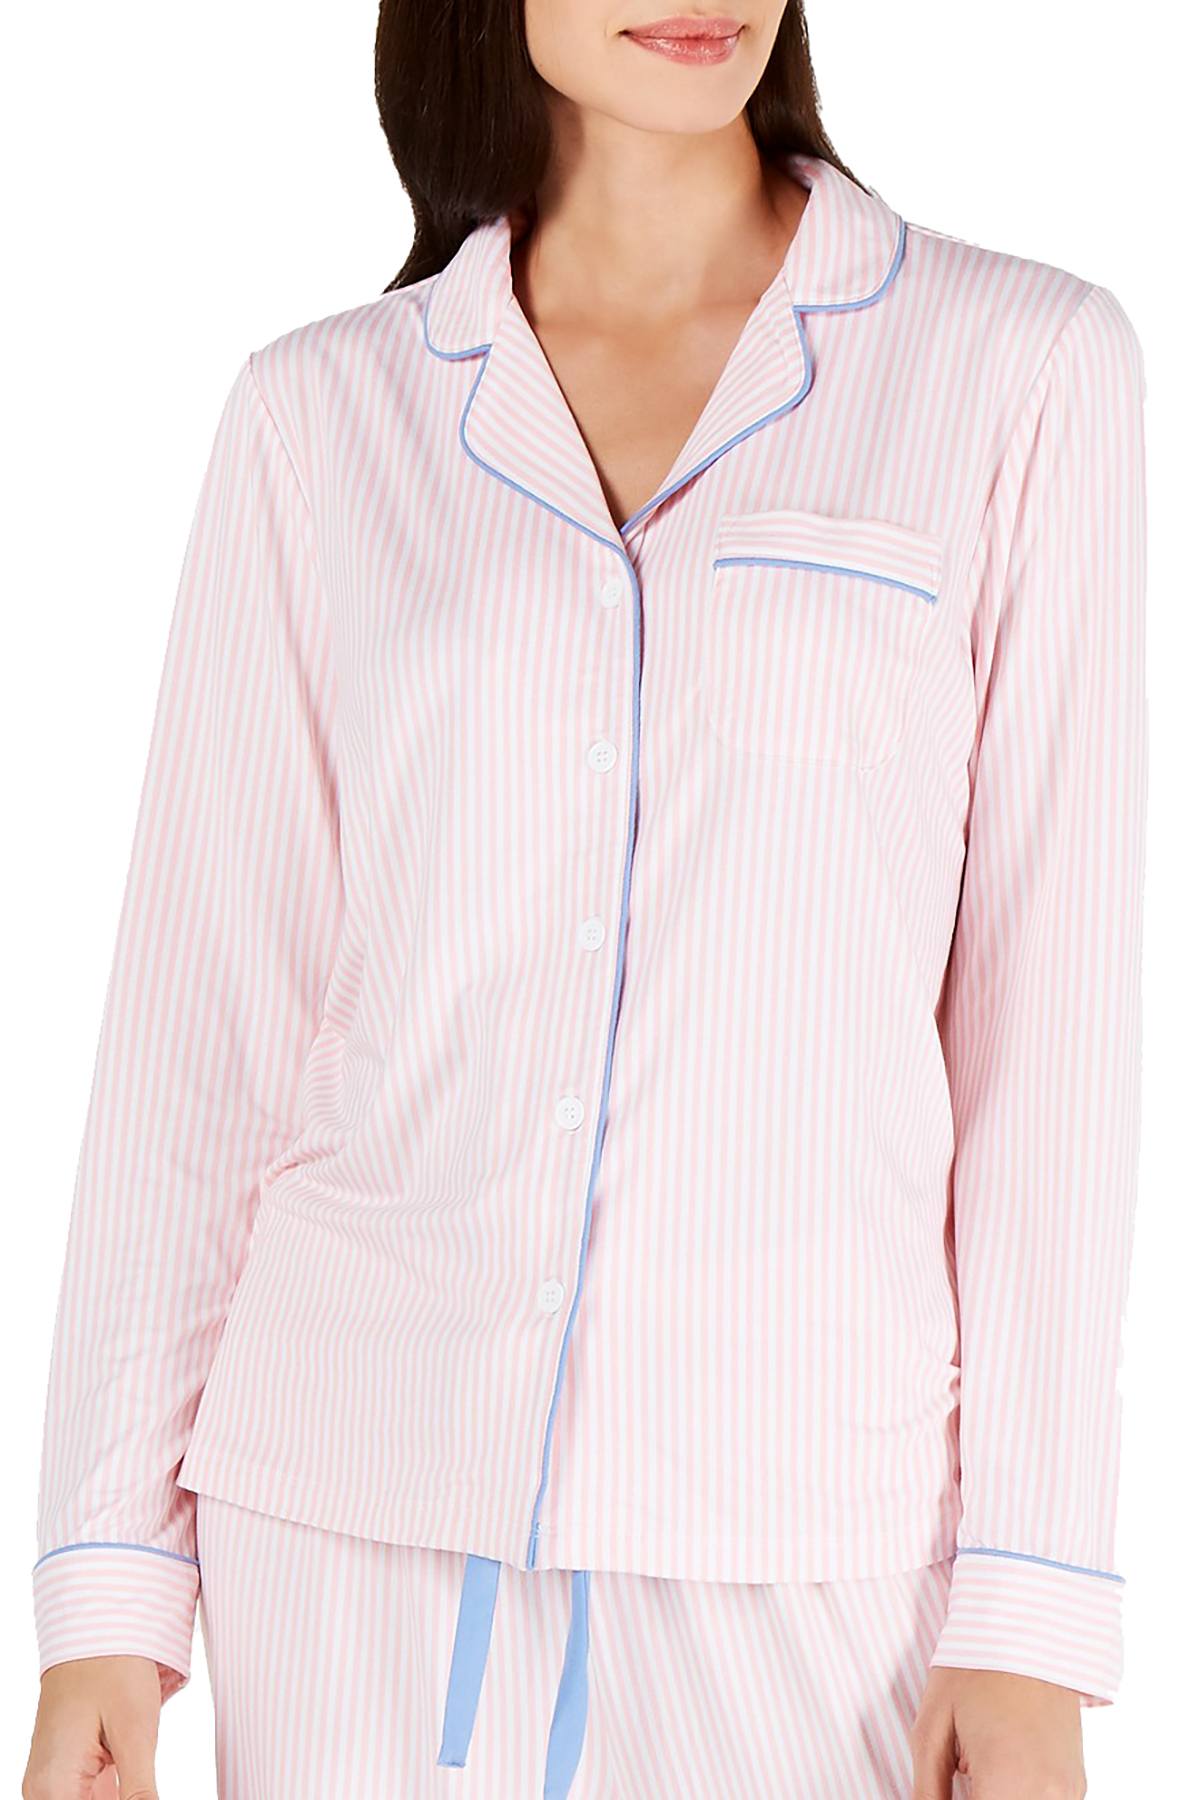 Charter Club Notch Collar Pajama Top in Ticking Stripe Pink